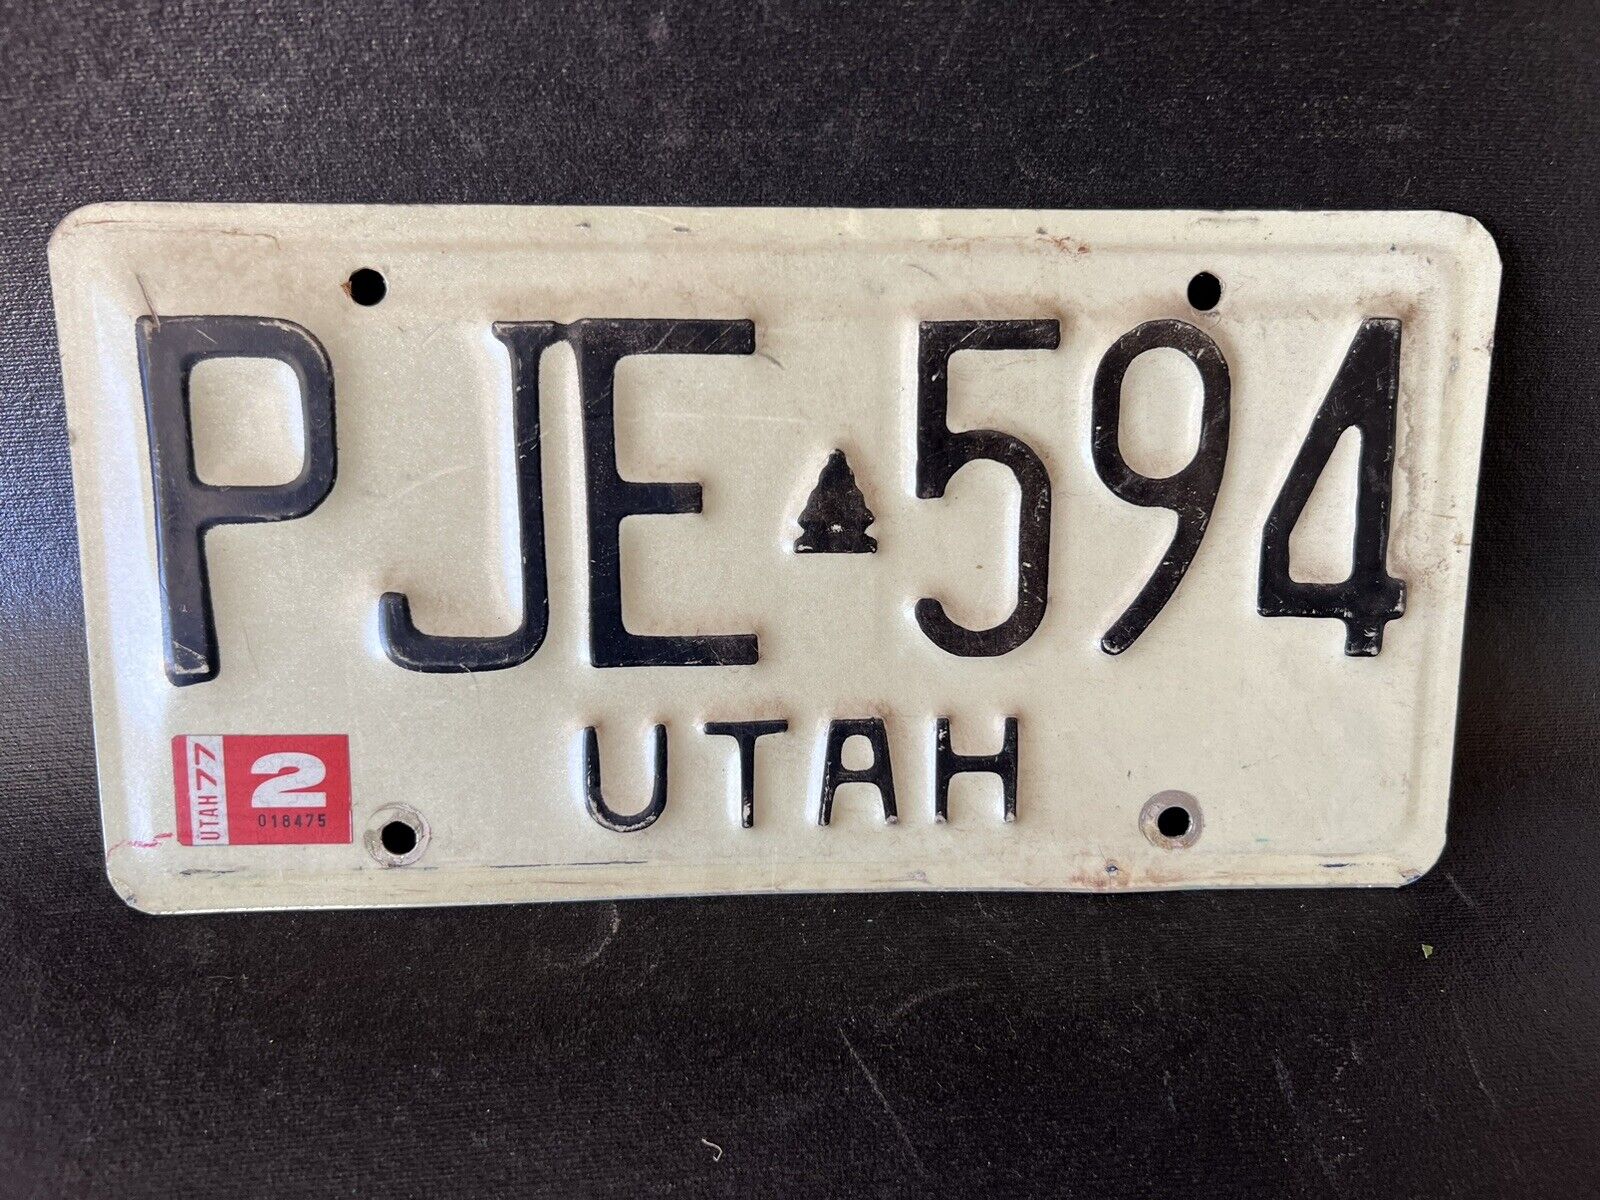 Vintage License Plate Utah PJE 594 White/ Black Letters 1977 Matching Set